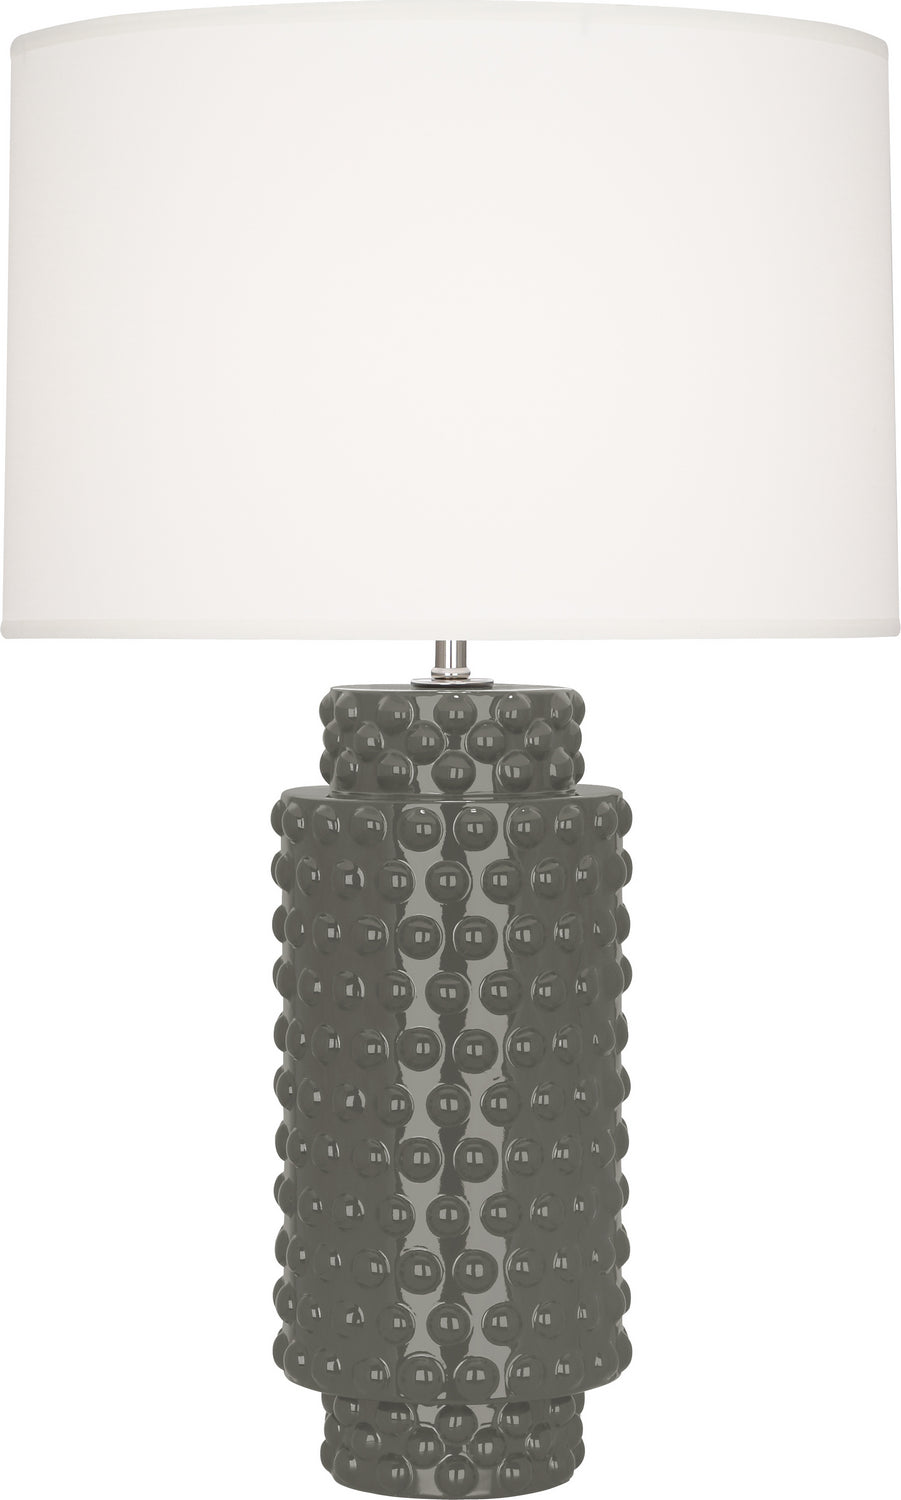 Robert Abbey - One Light Table Lamp - Dolly - Ash Glazed Textured Ceramic- Union Lighting Luminaires Decor